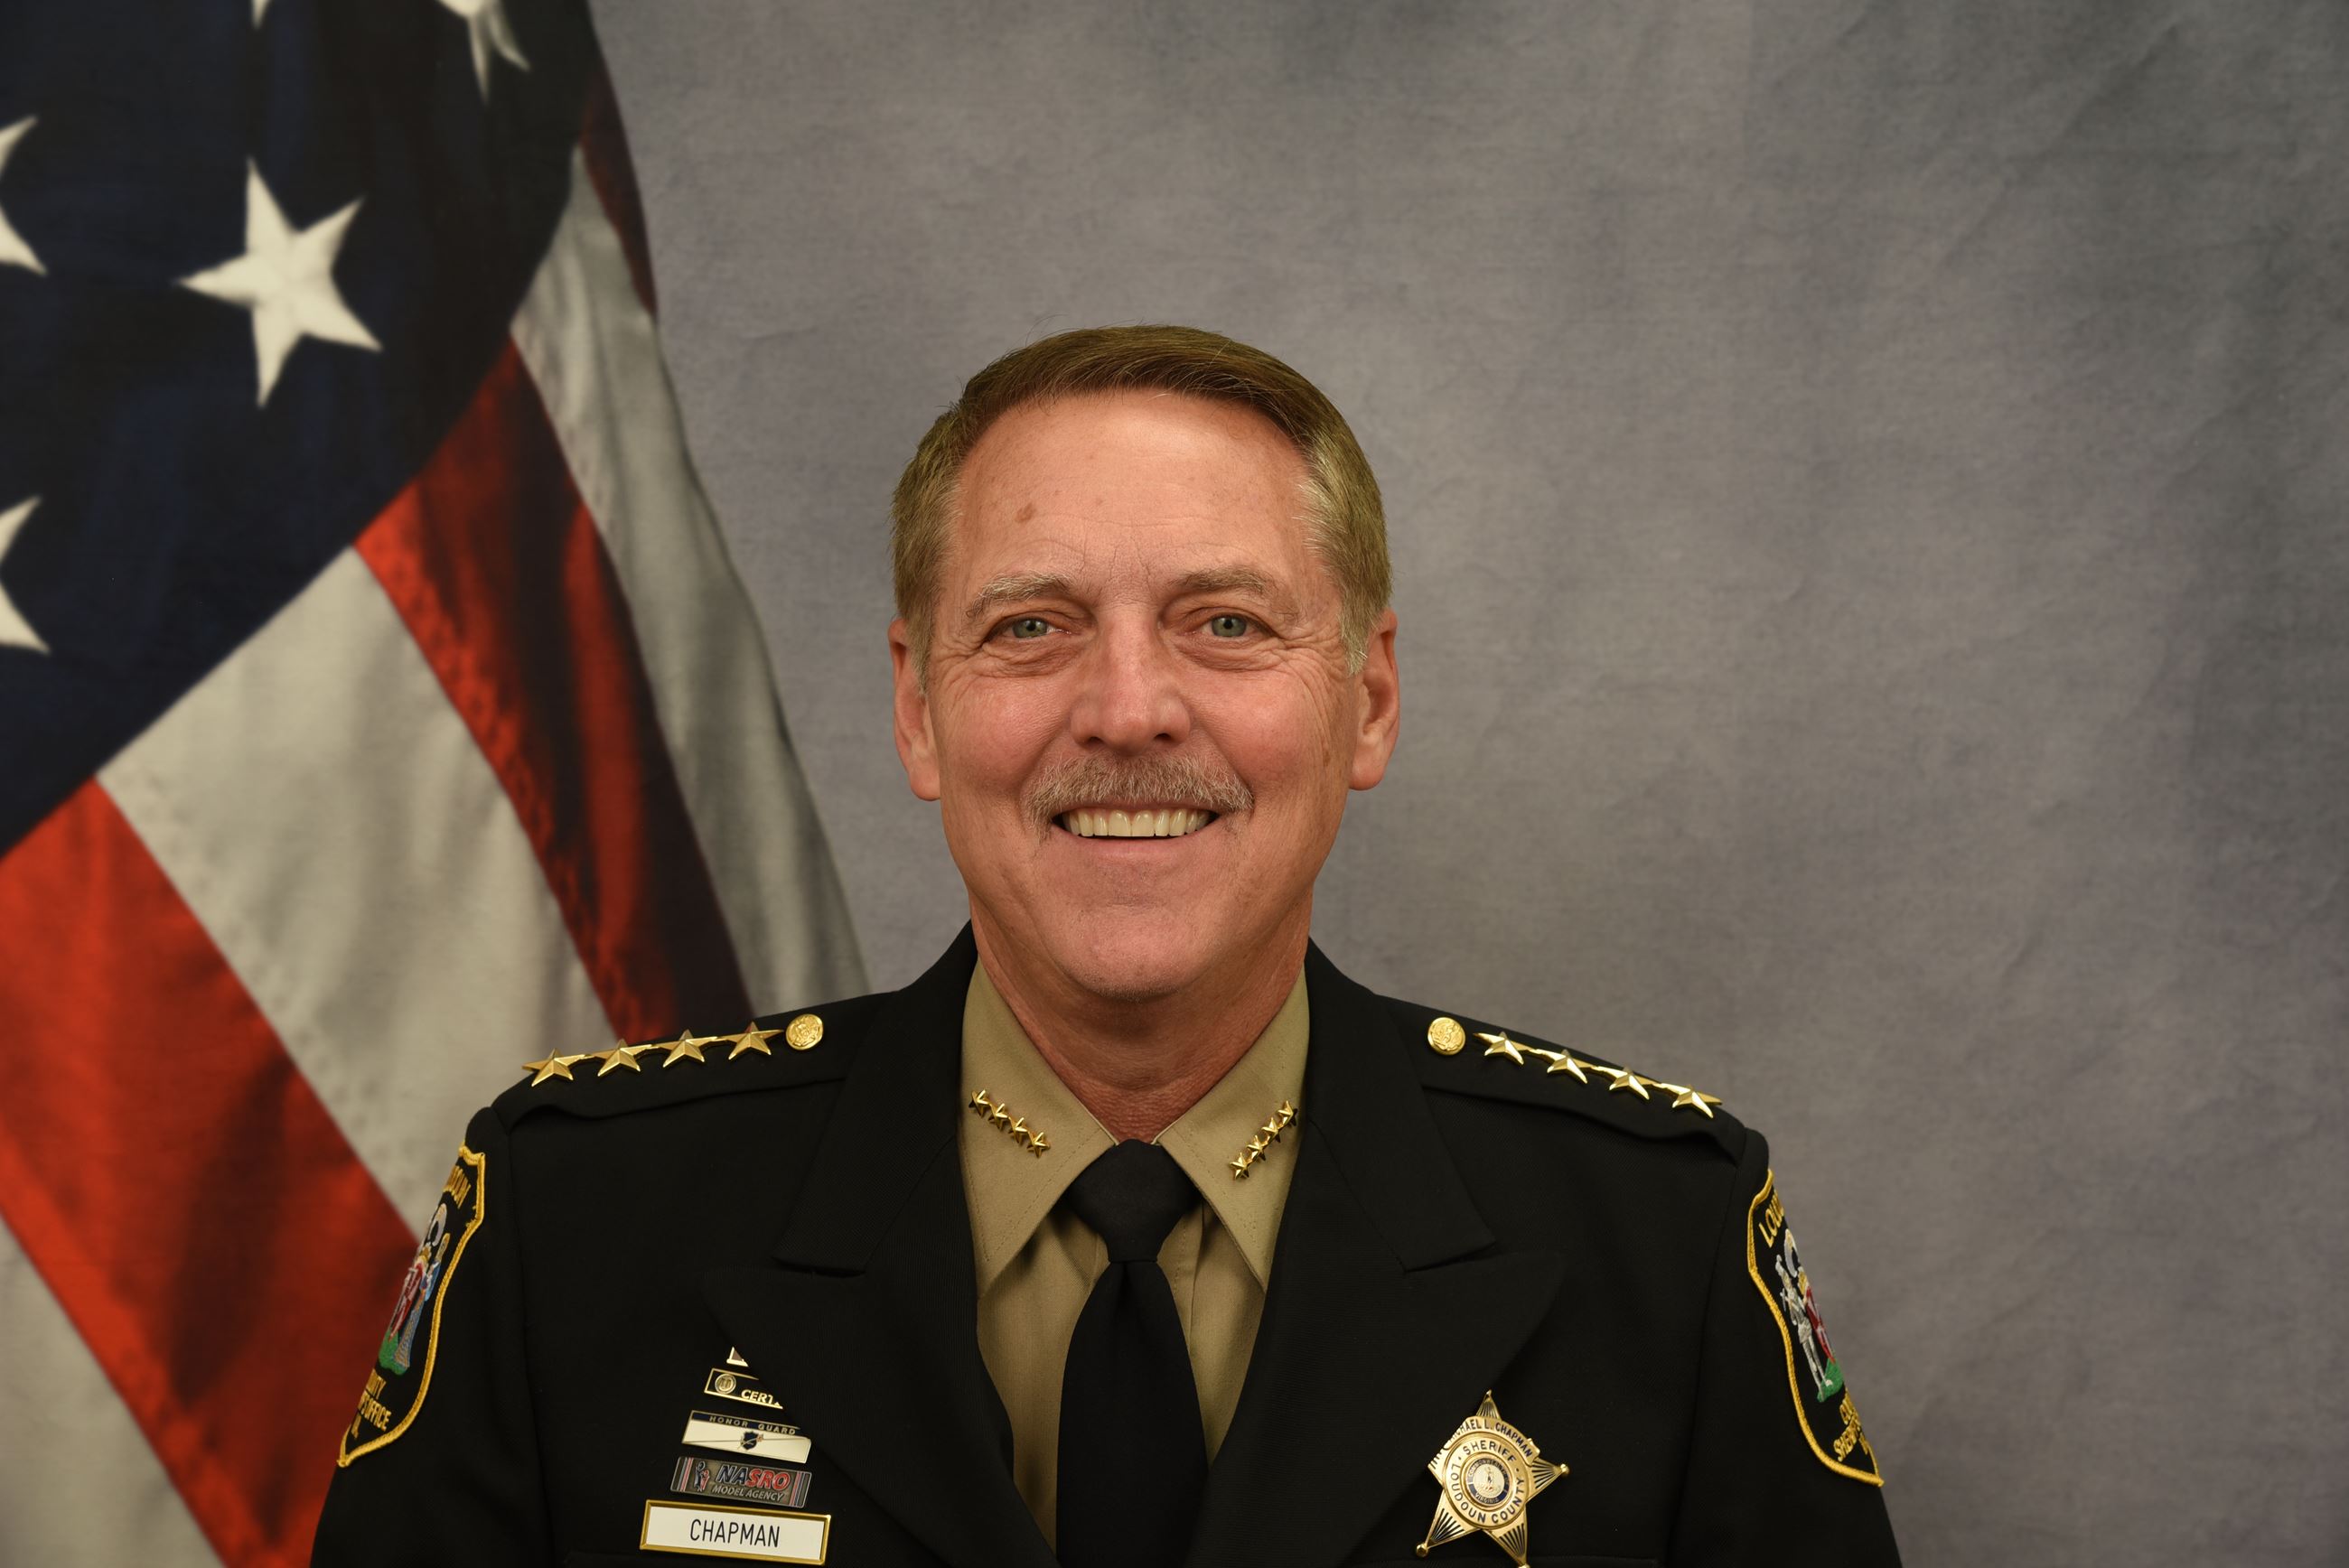 Sheriff Chapman  